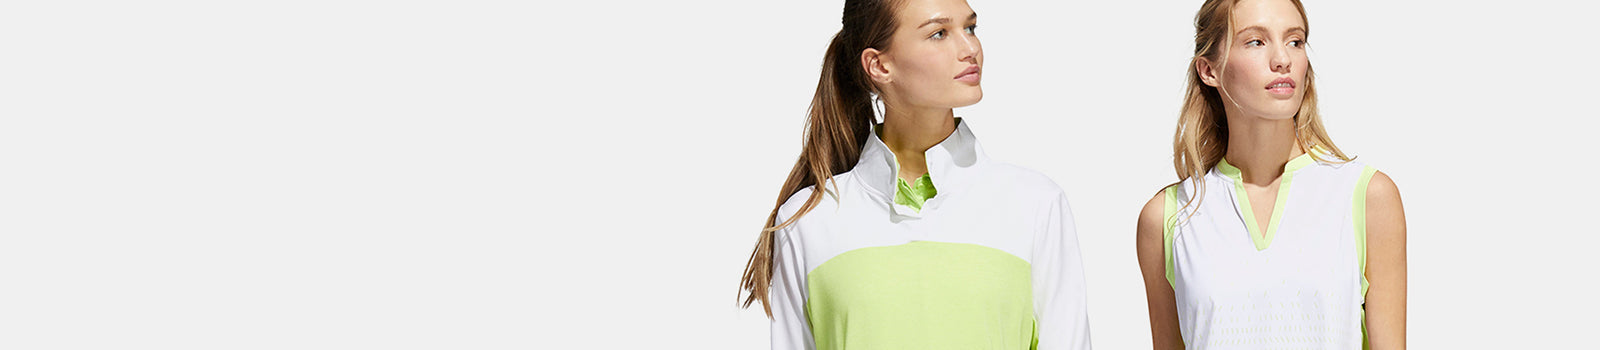 Adidas women's golf wear Infinite energy collection